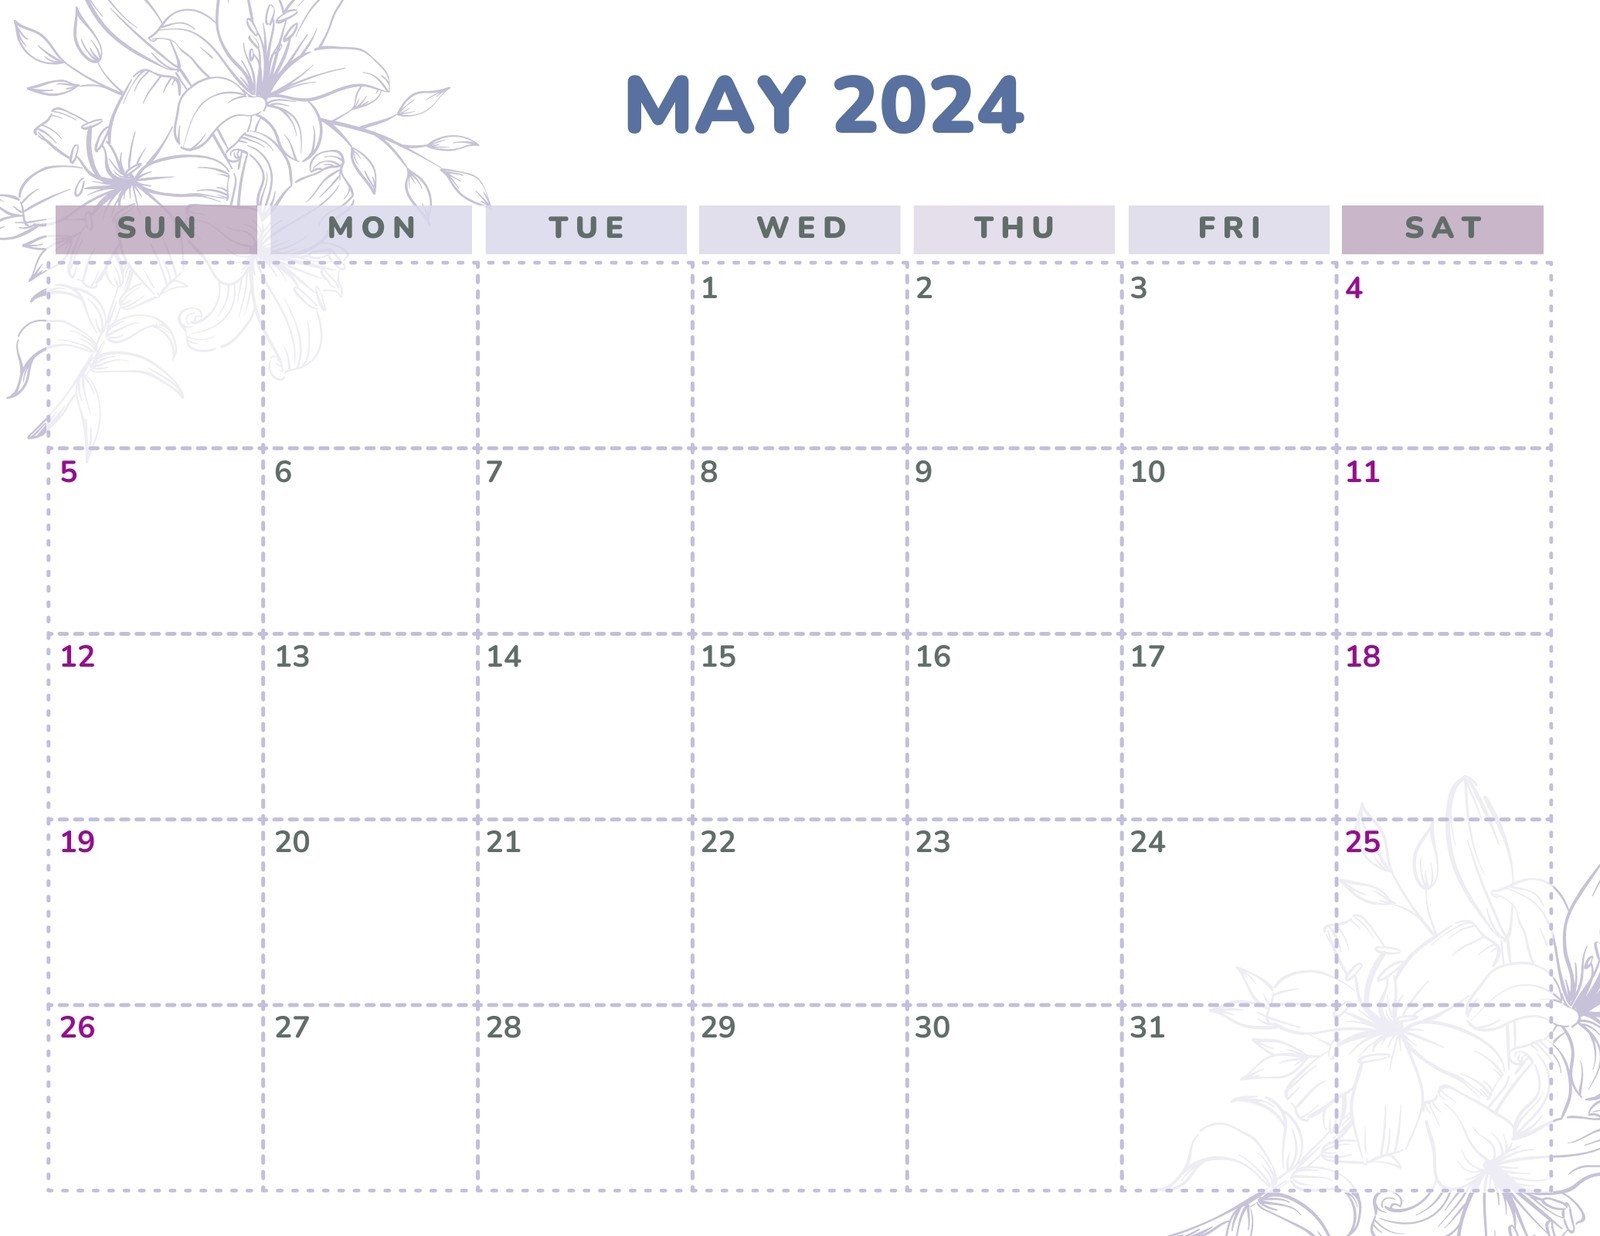 Free And Customizable Calendar Templates | Canva with regard to Free Printable Calendar 2024 Customizable